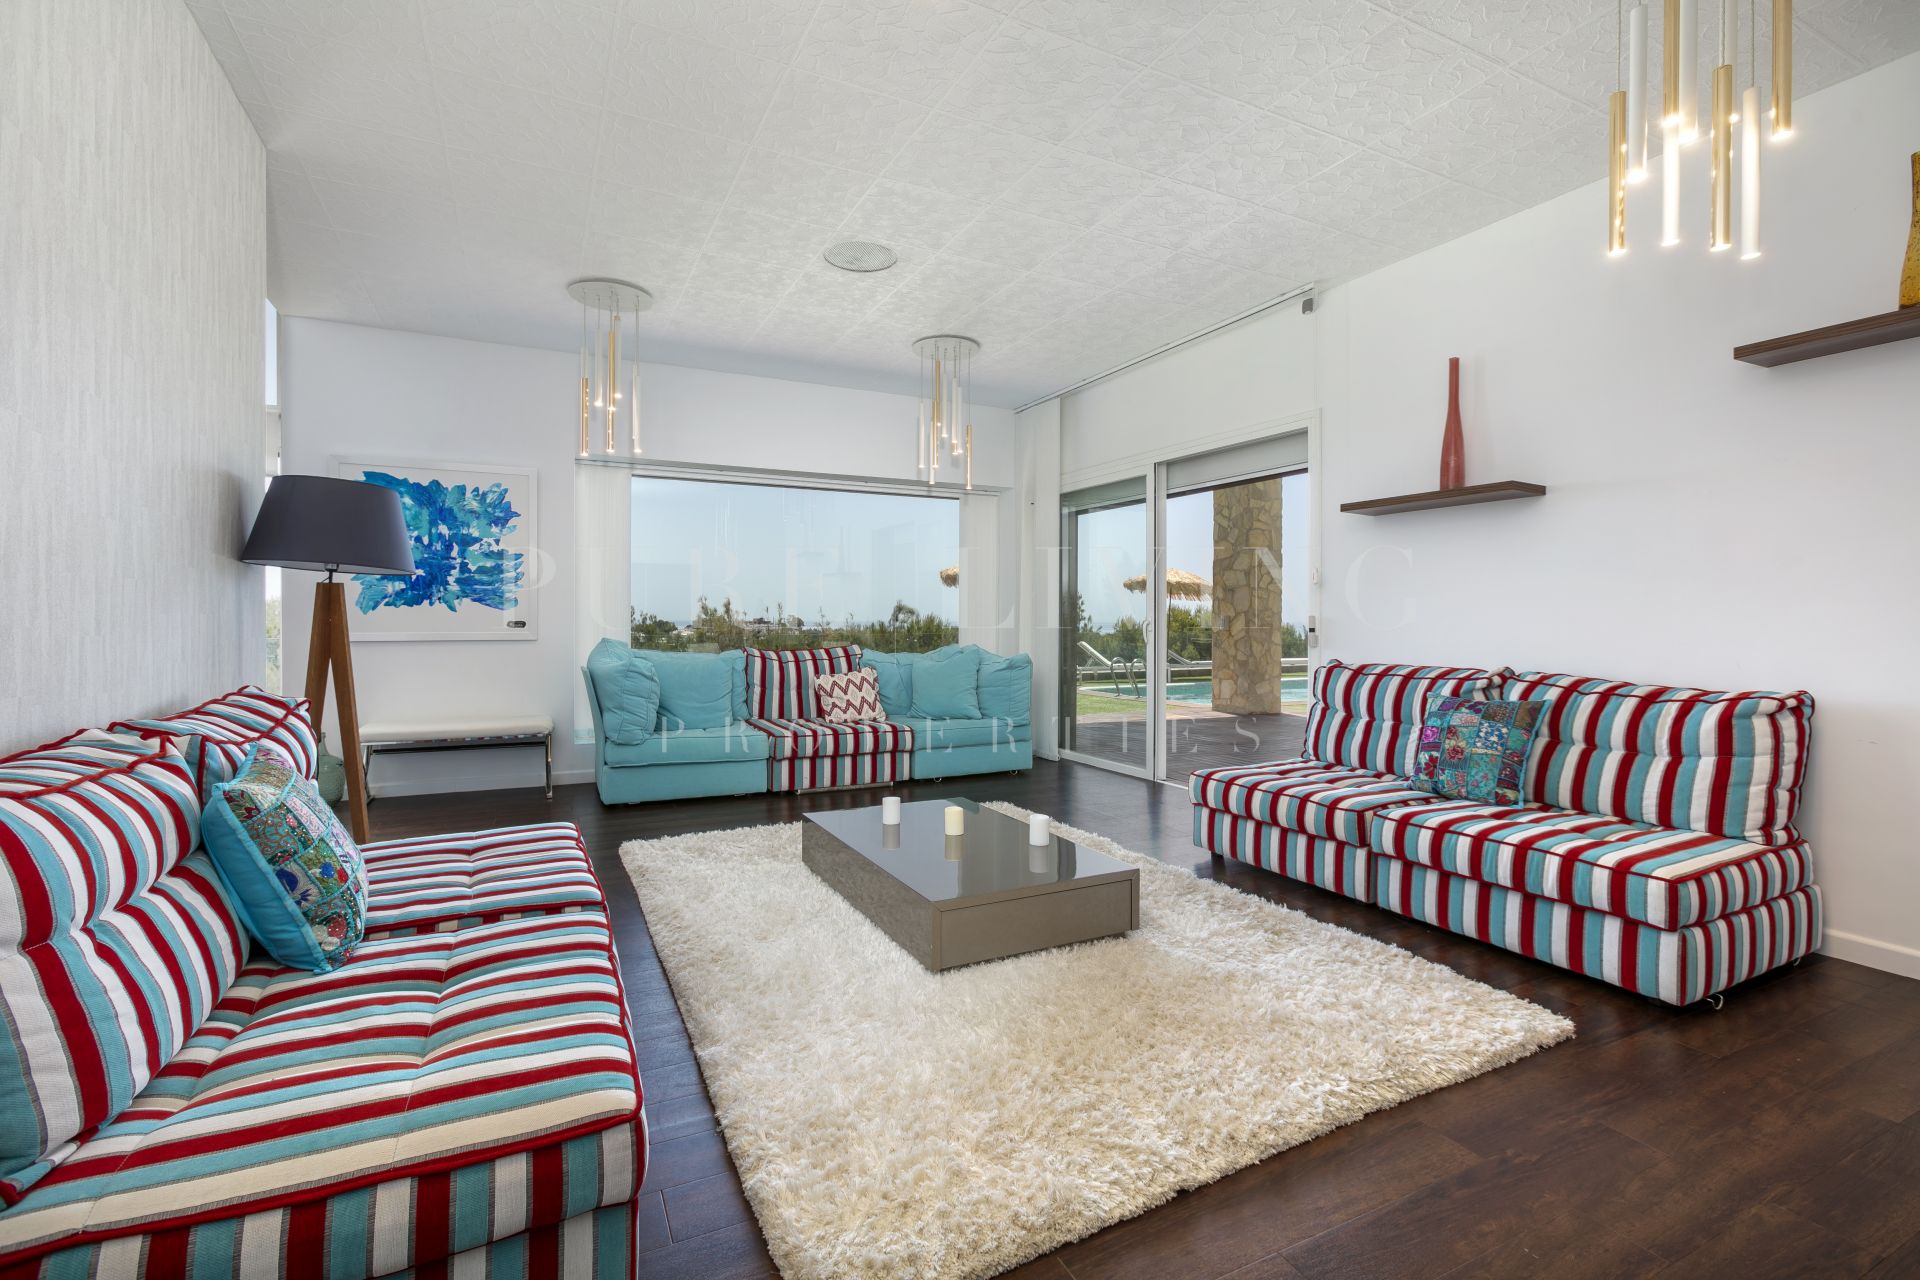 Superb four bedroom frontline golf villa for sale with panoramic views in La Alqueria, Benahavis